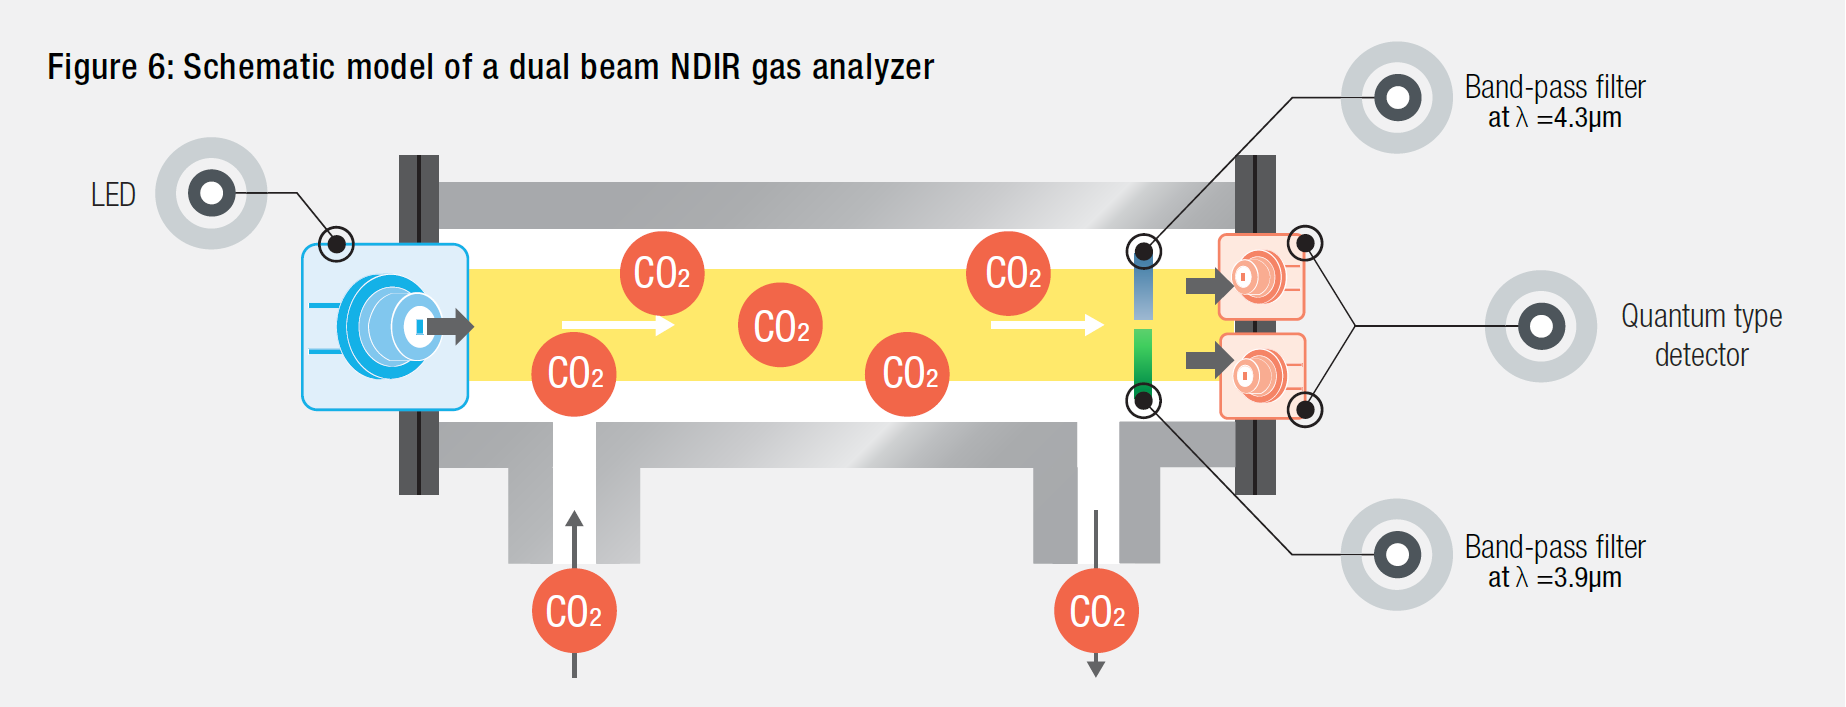 Figure 6: Schematic model of a dual beam NDIR gas analyzer